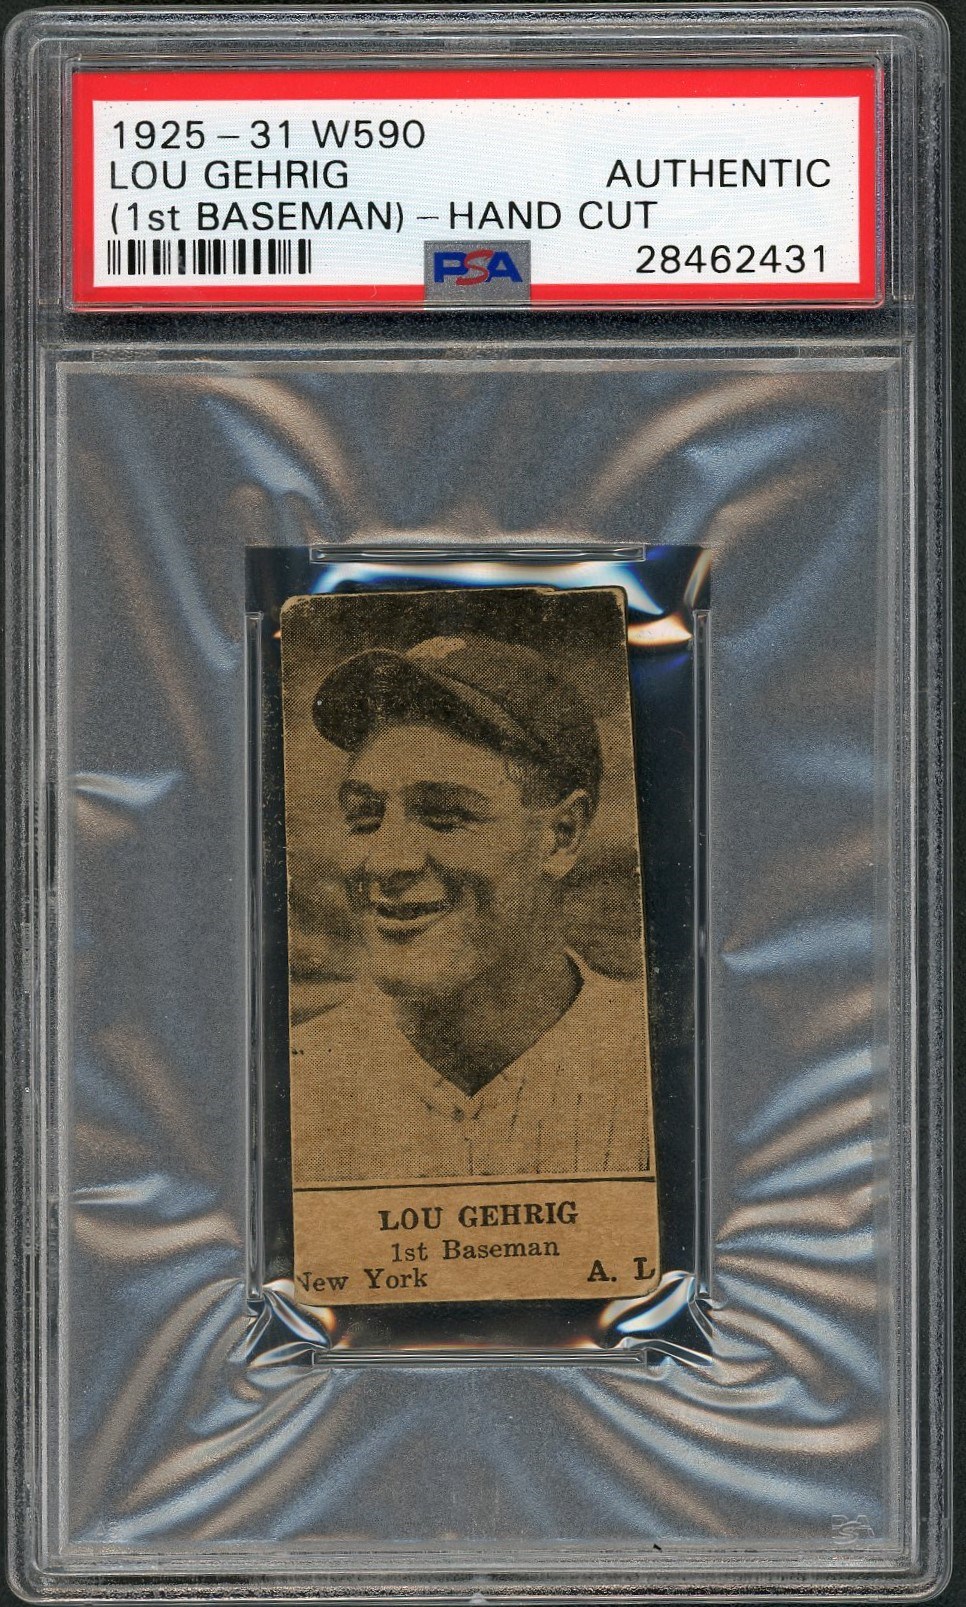 1925-31 W590 Lou Gehrig (Hand Cut) - PSA AUTHENTIC